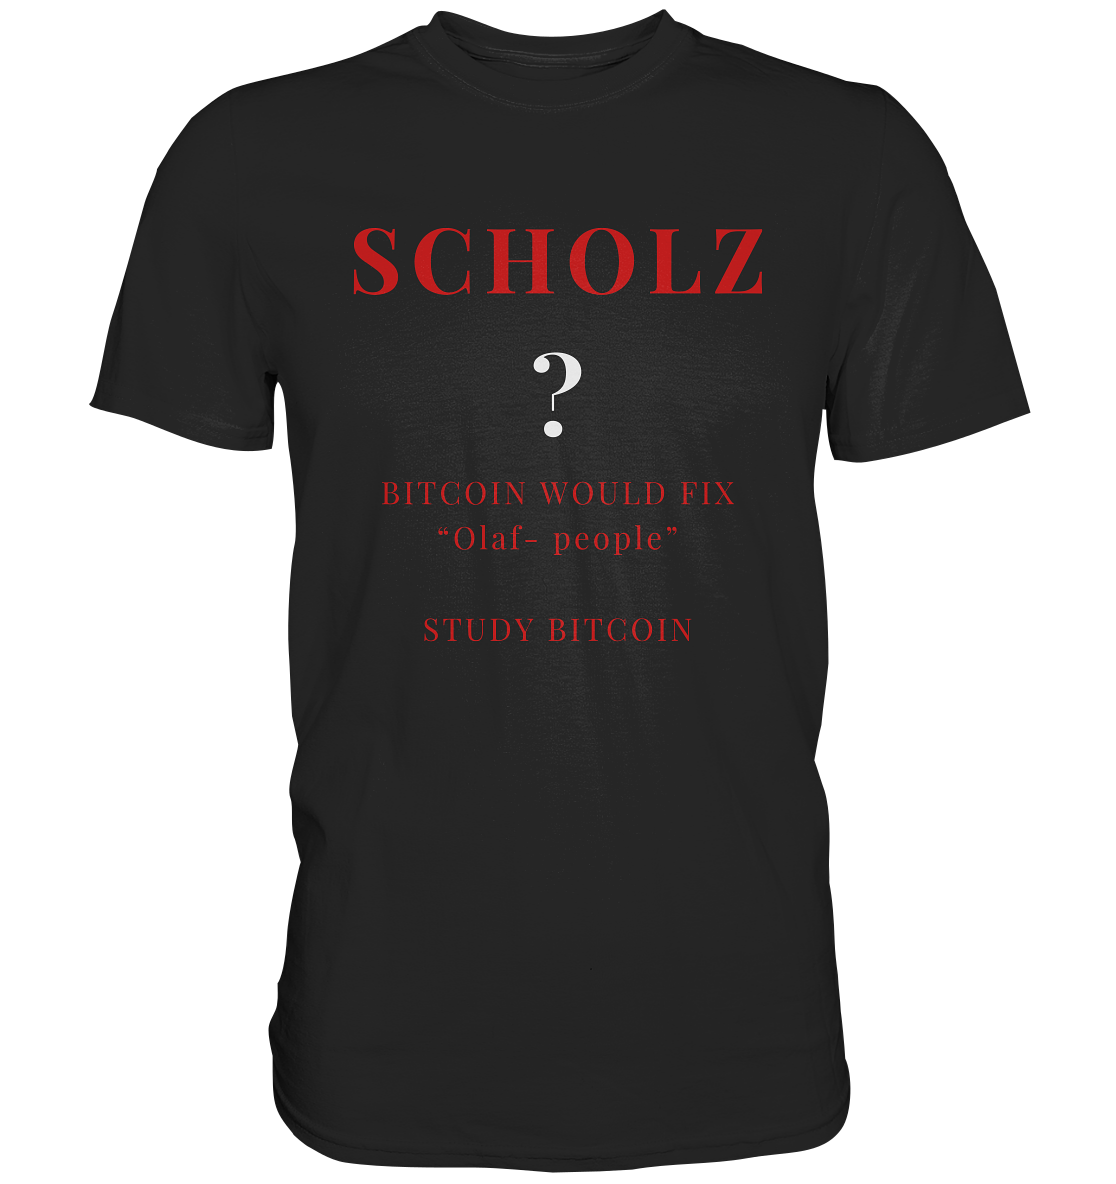 SCHOLZ ? BITCOIN WOULD FIX "Olaf people" STUDY BITCOIN - (Ladies Collection 21% Rabatt bis zum Halving 2024) - Premium Shirt